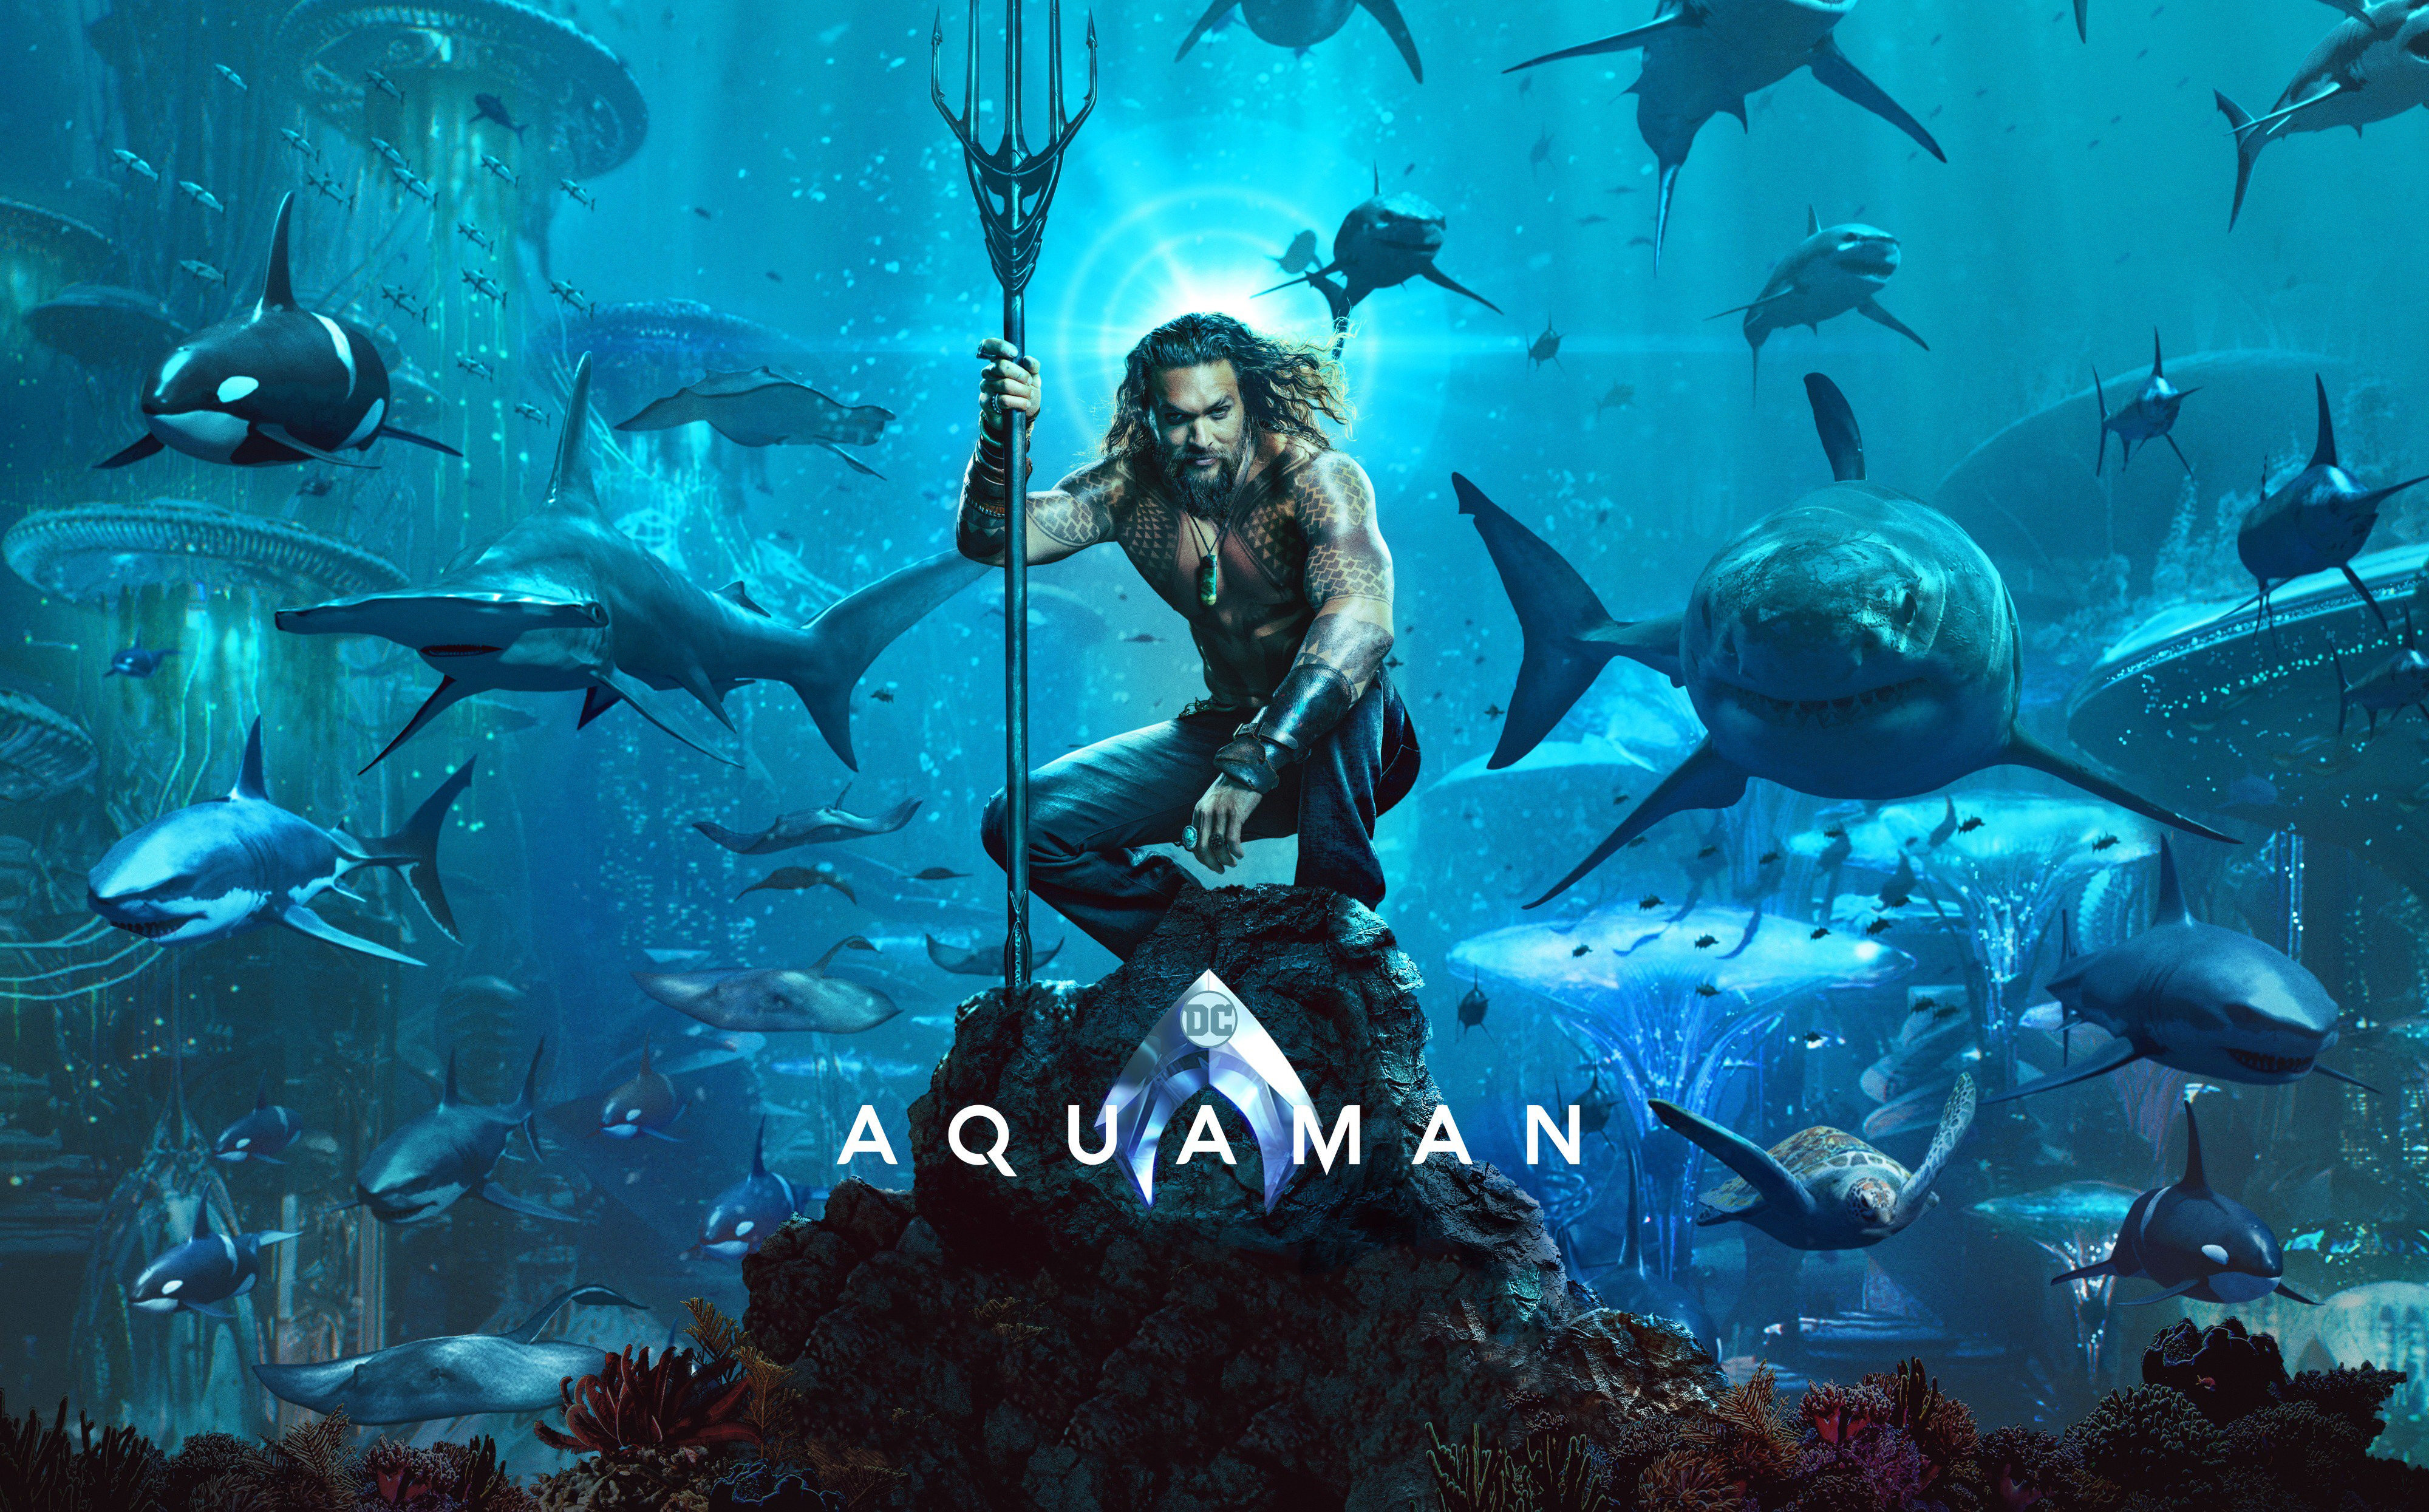 Aquaman 4k Ultra HD Wallpaper Background Image Id